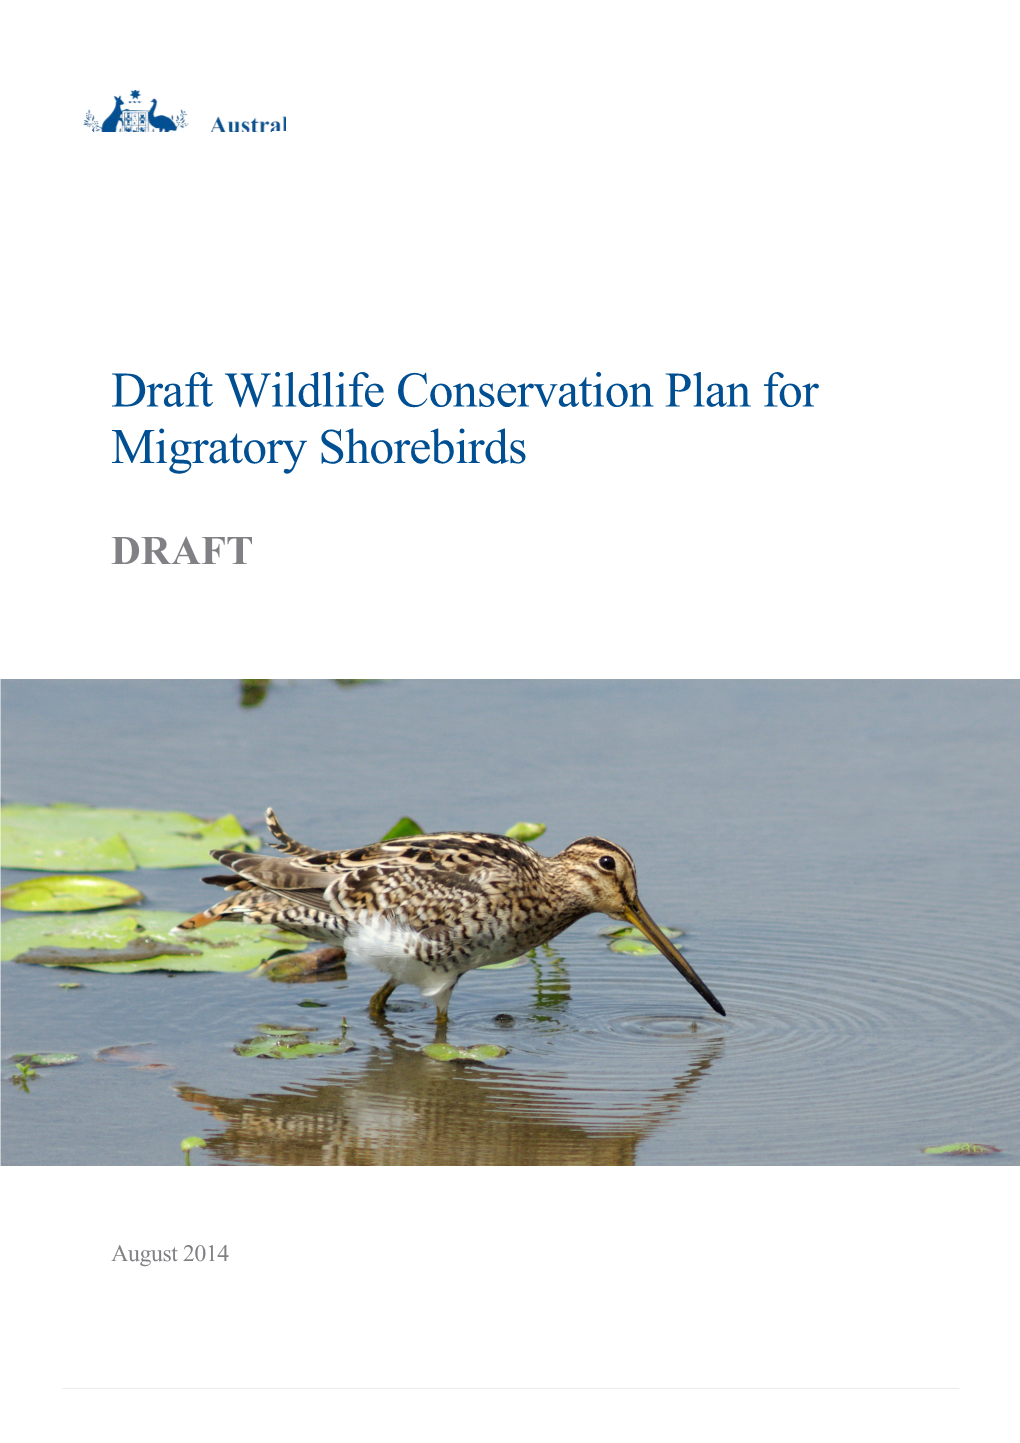 Draft Wildlife Conservation Plan for Migratory Shorebirds